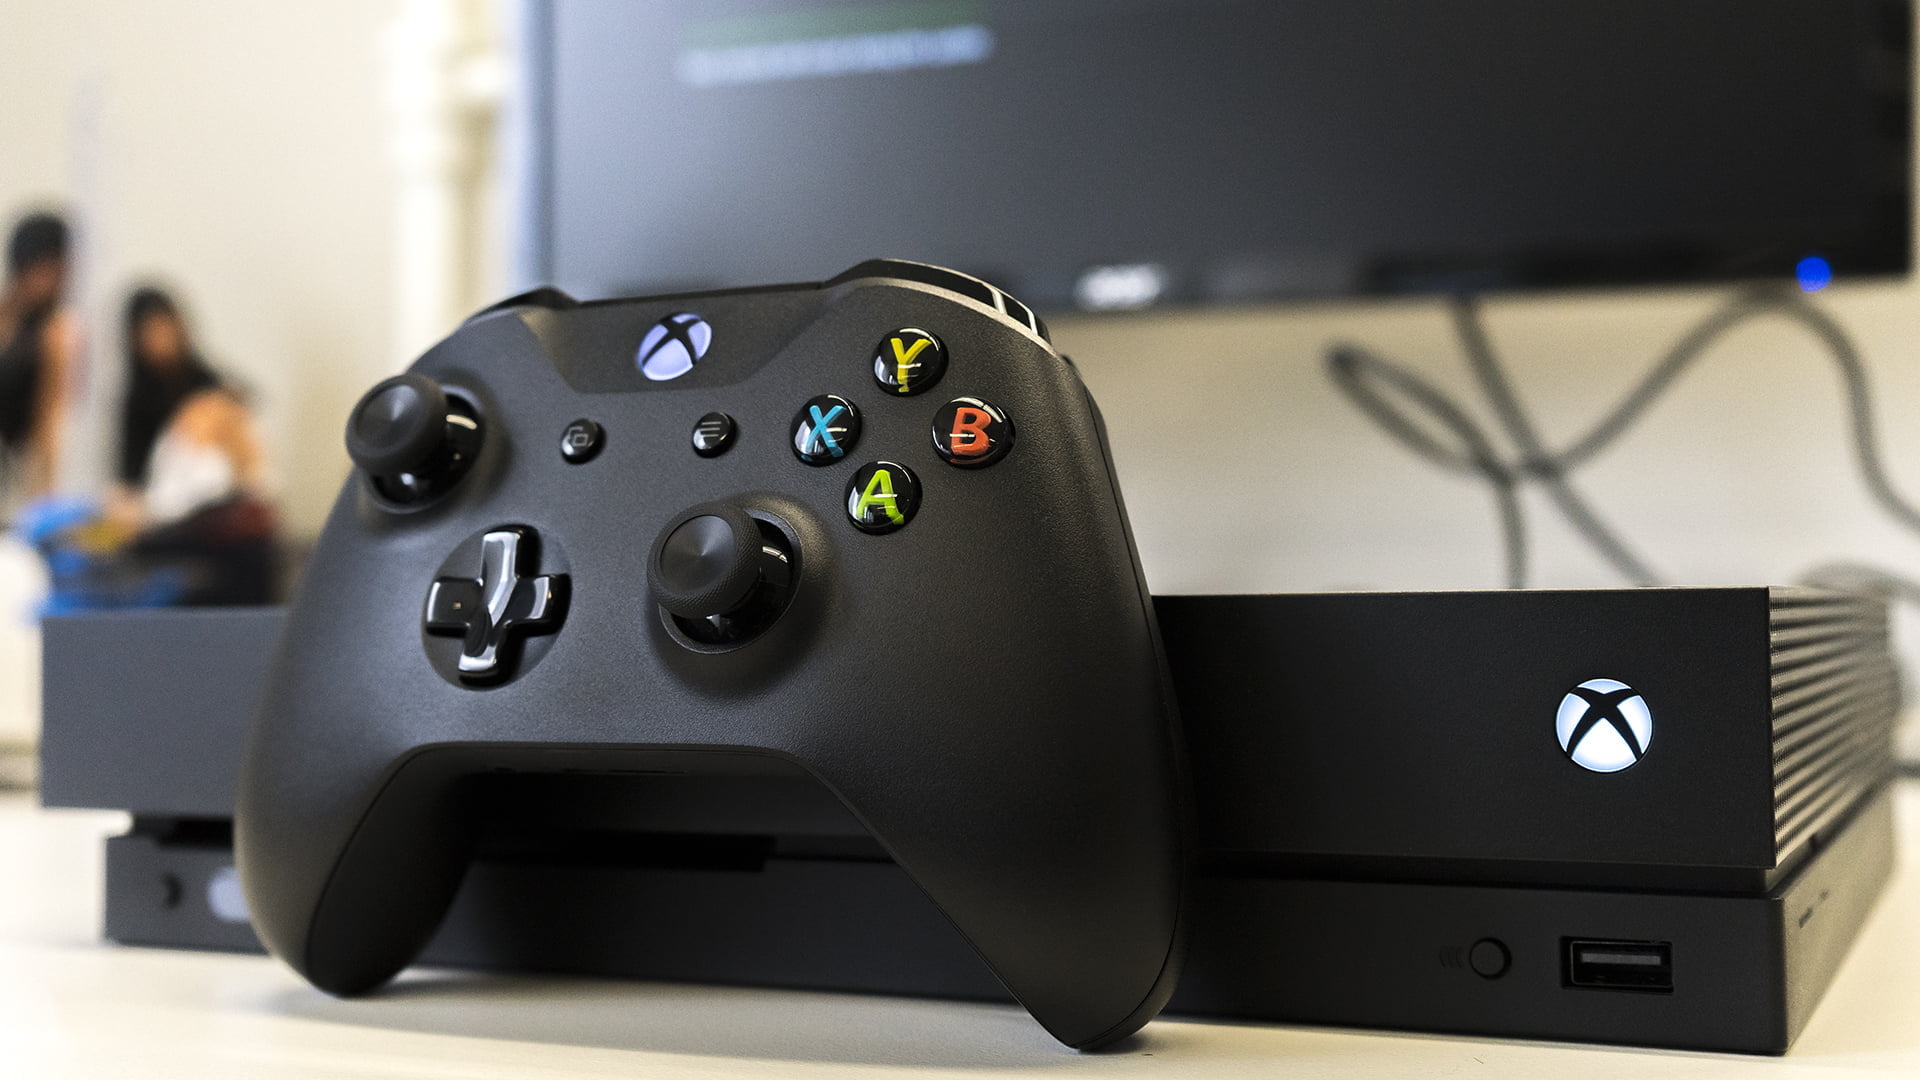 Xbox One X Kodi Box Review for June 2021 • Kodi Expert
